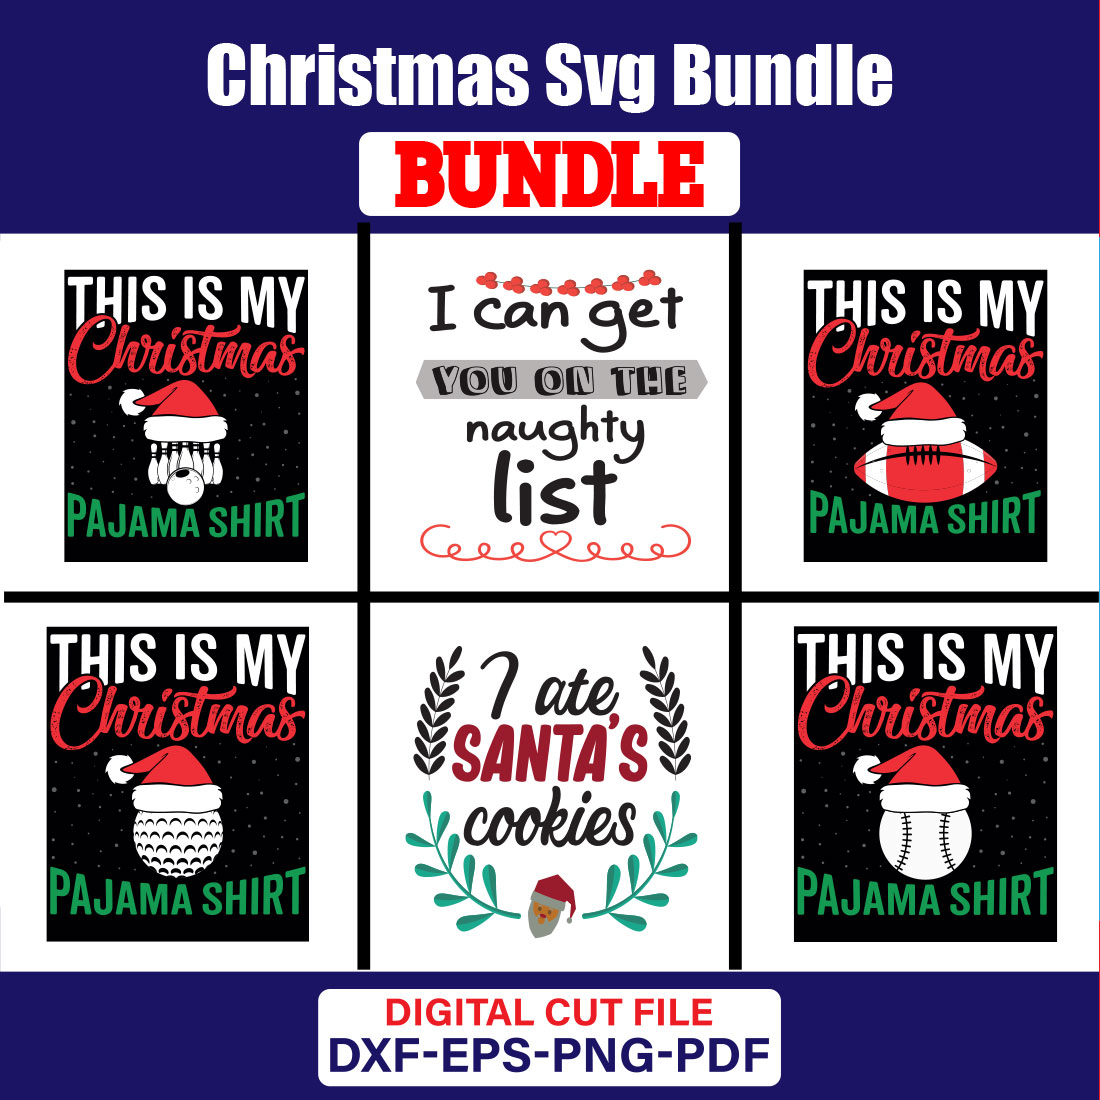 Christmas T-shirt Design Bundle Vol-88 cover image.